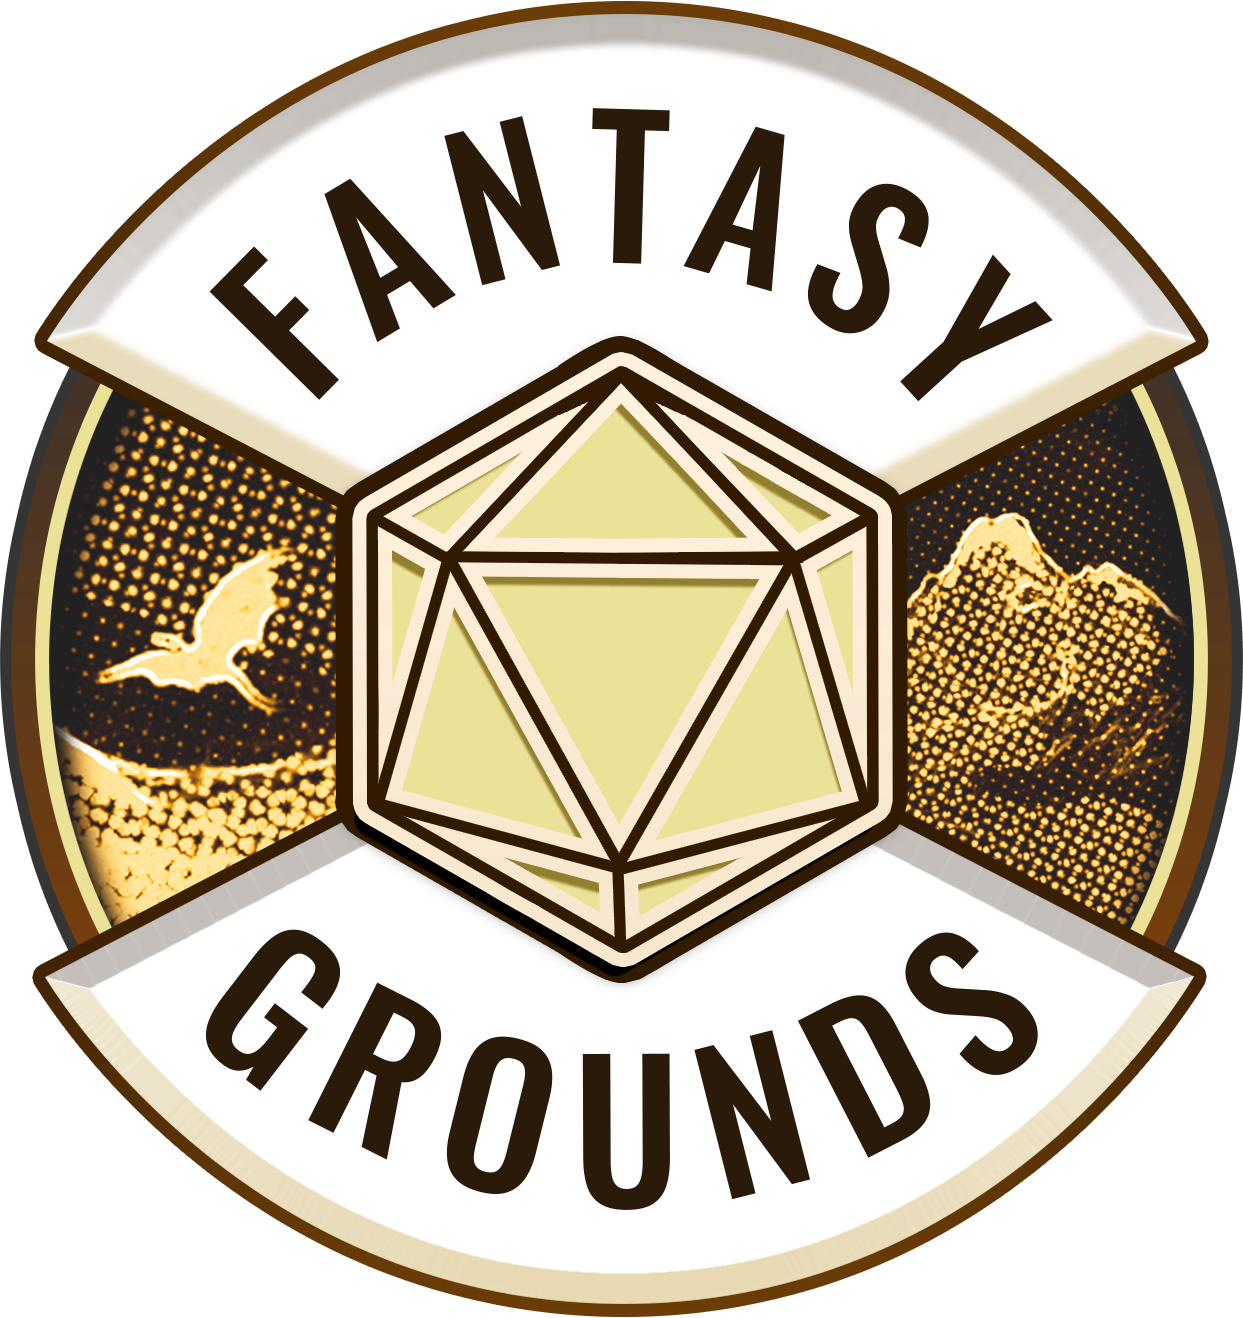 fantasy_grounds_logo_seal_master.png